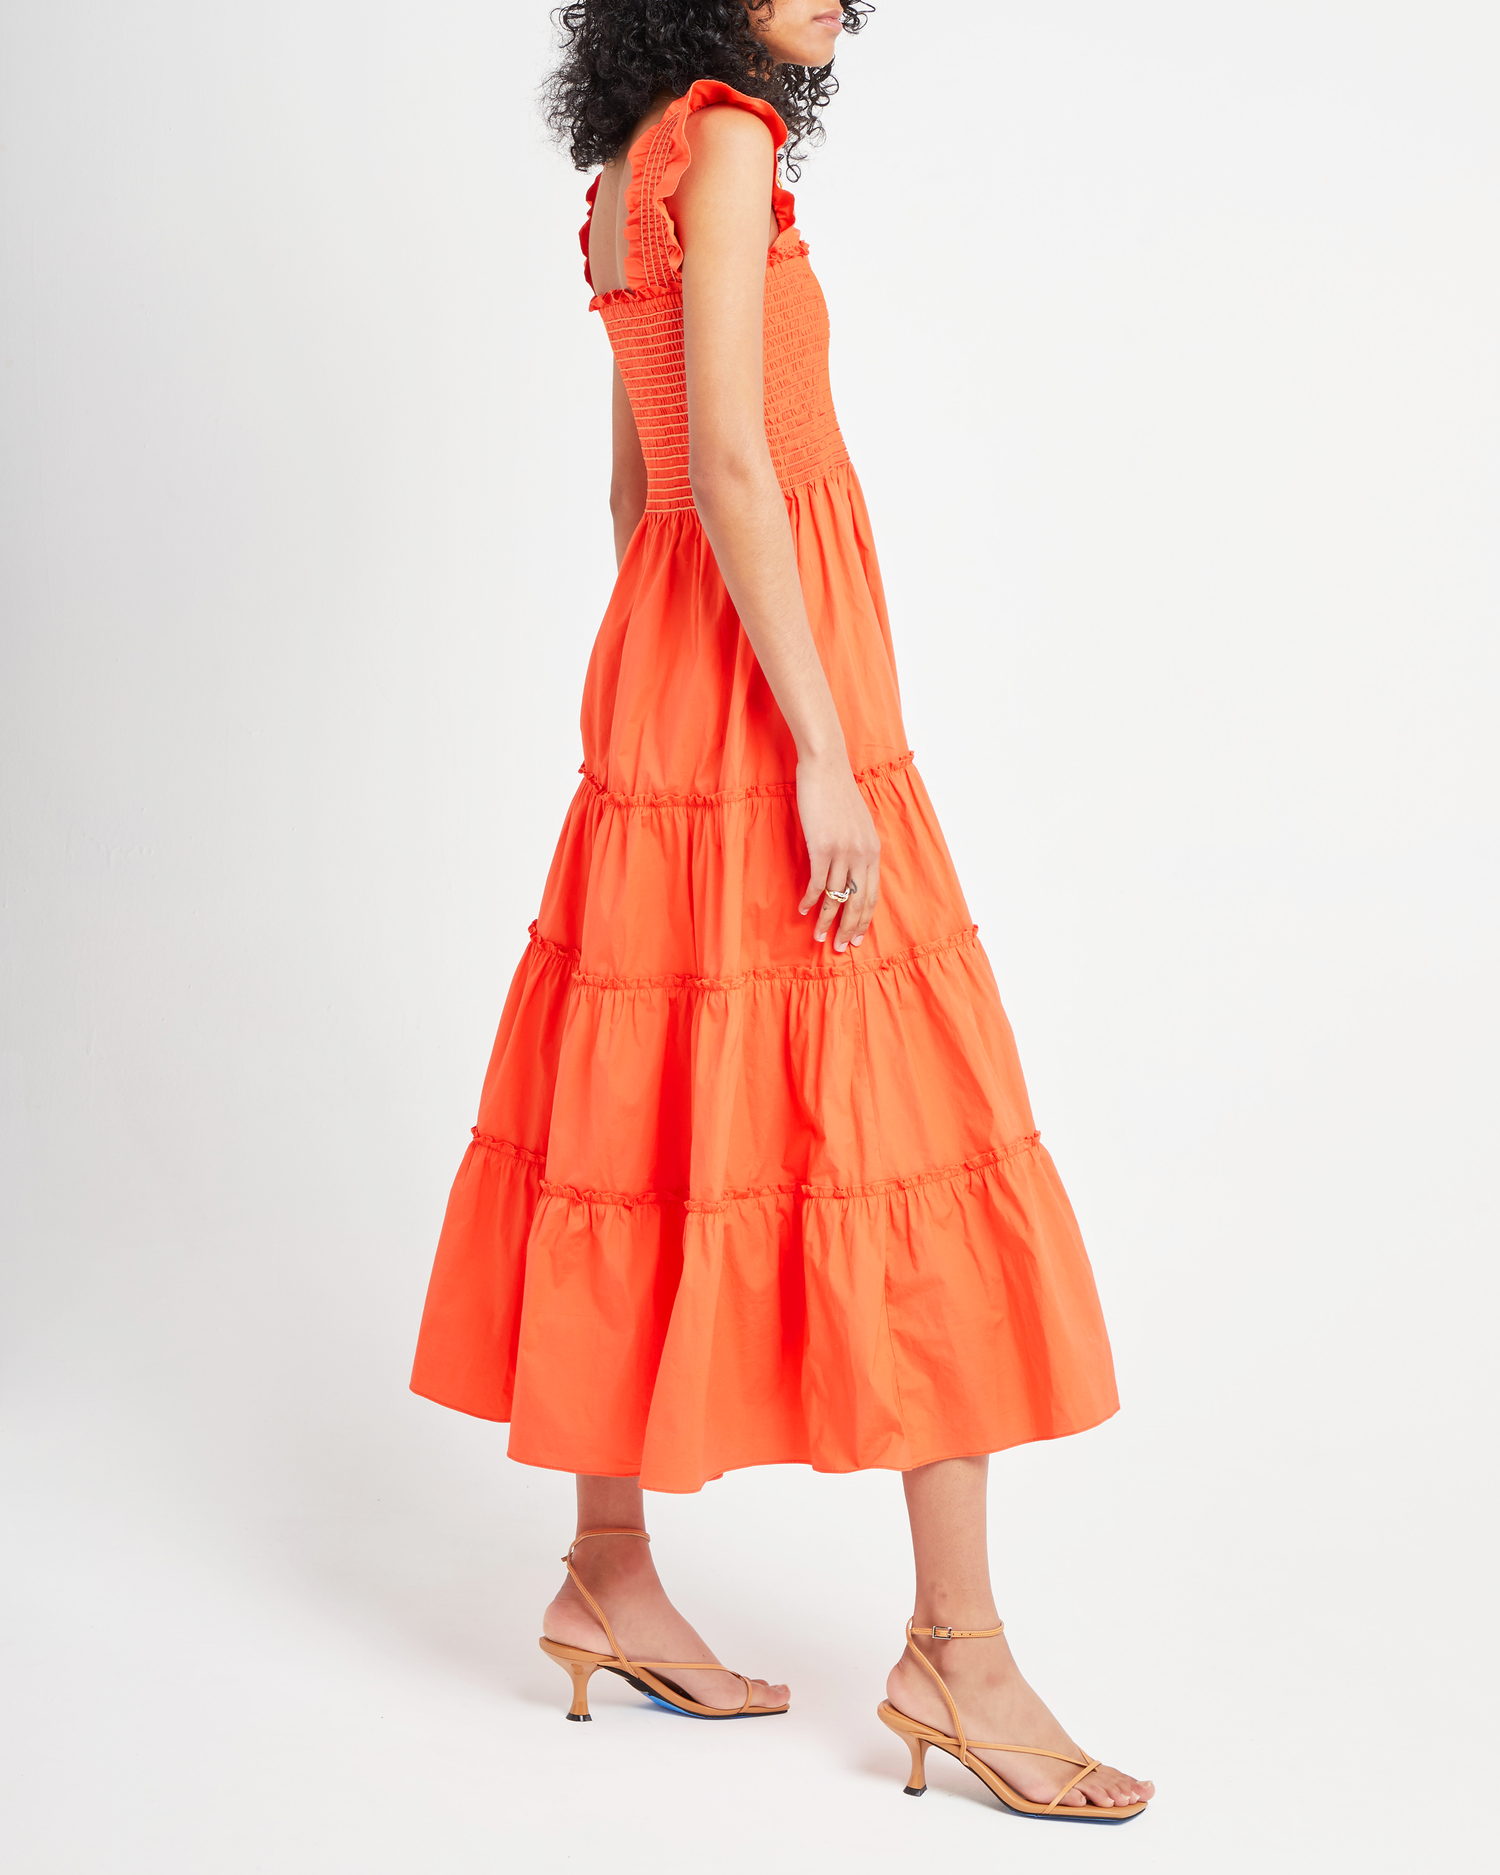 Third image of Calypso Maxi Dress, a orange maxi dress,ruffle cap sleeves, smocked bodice